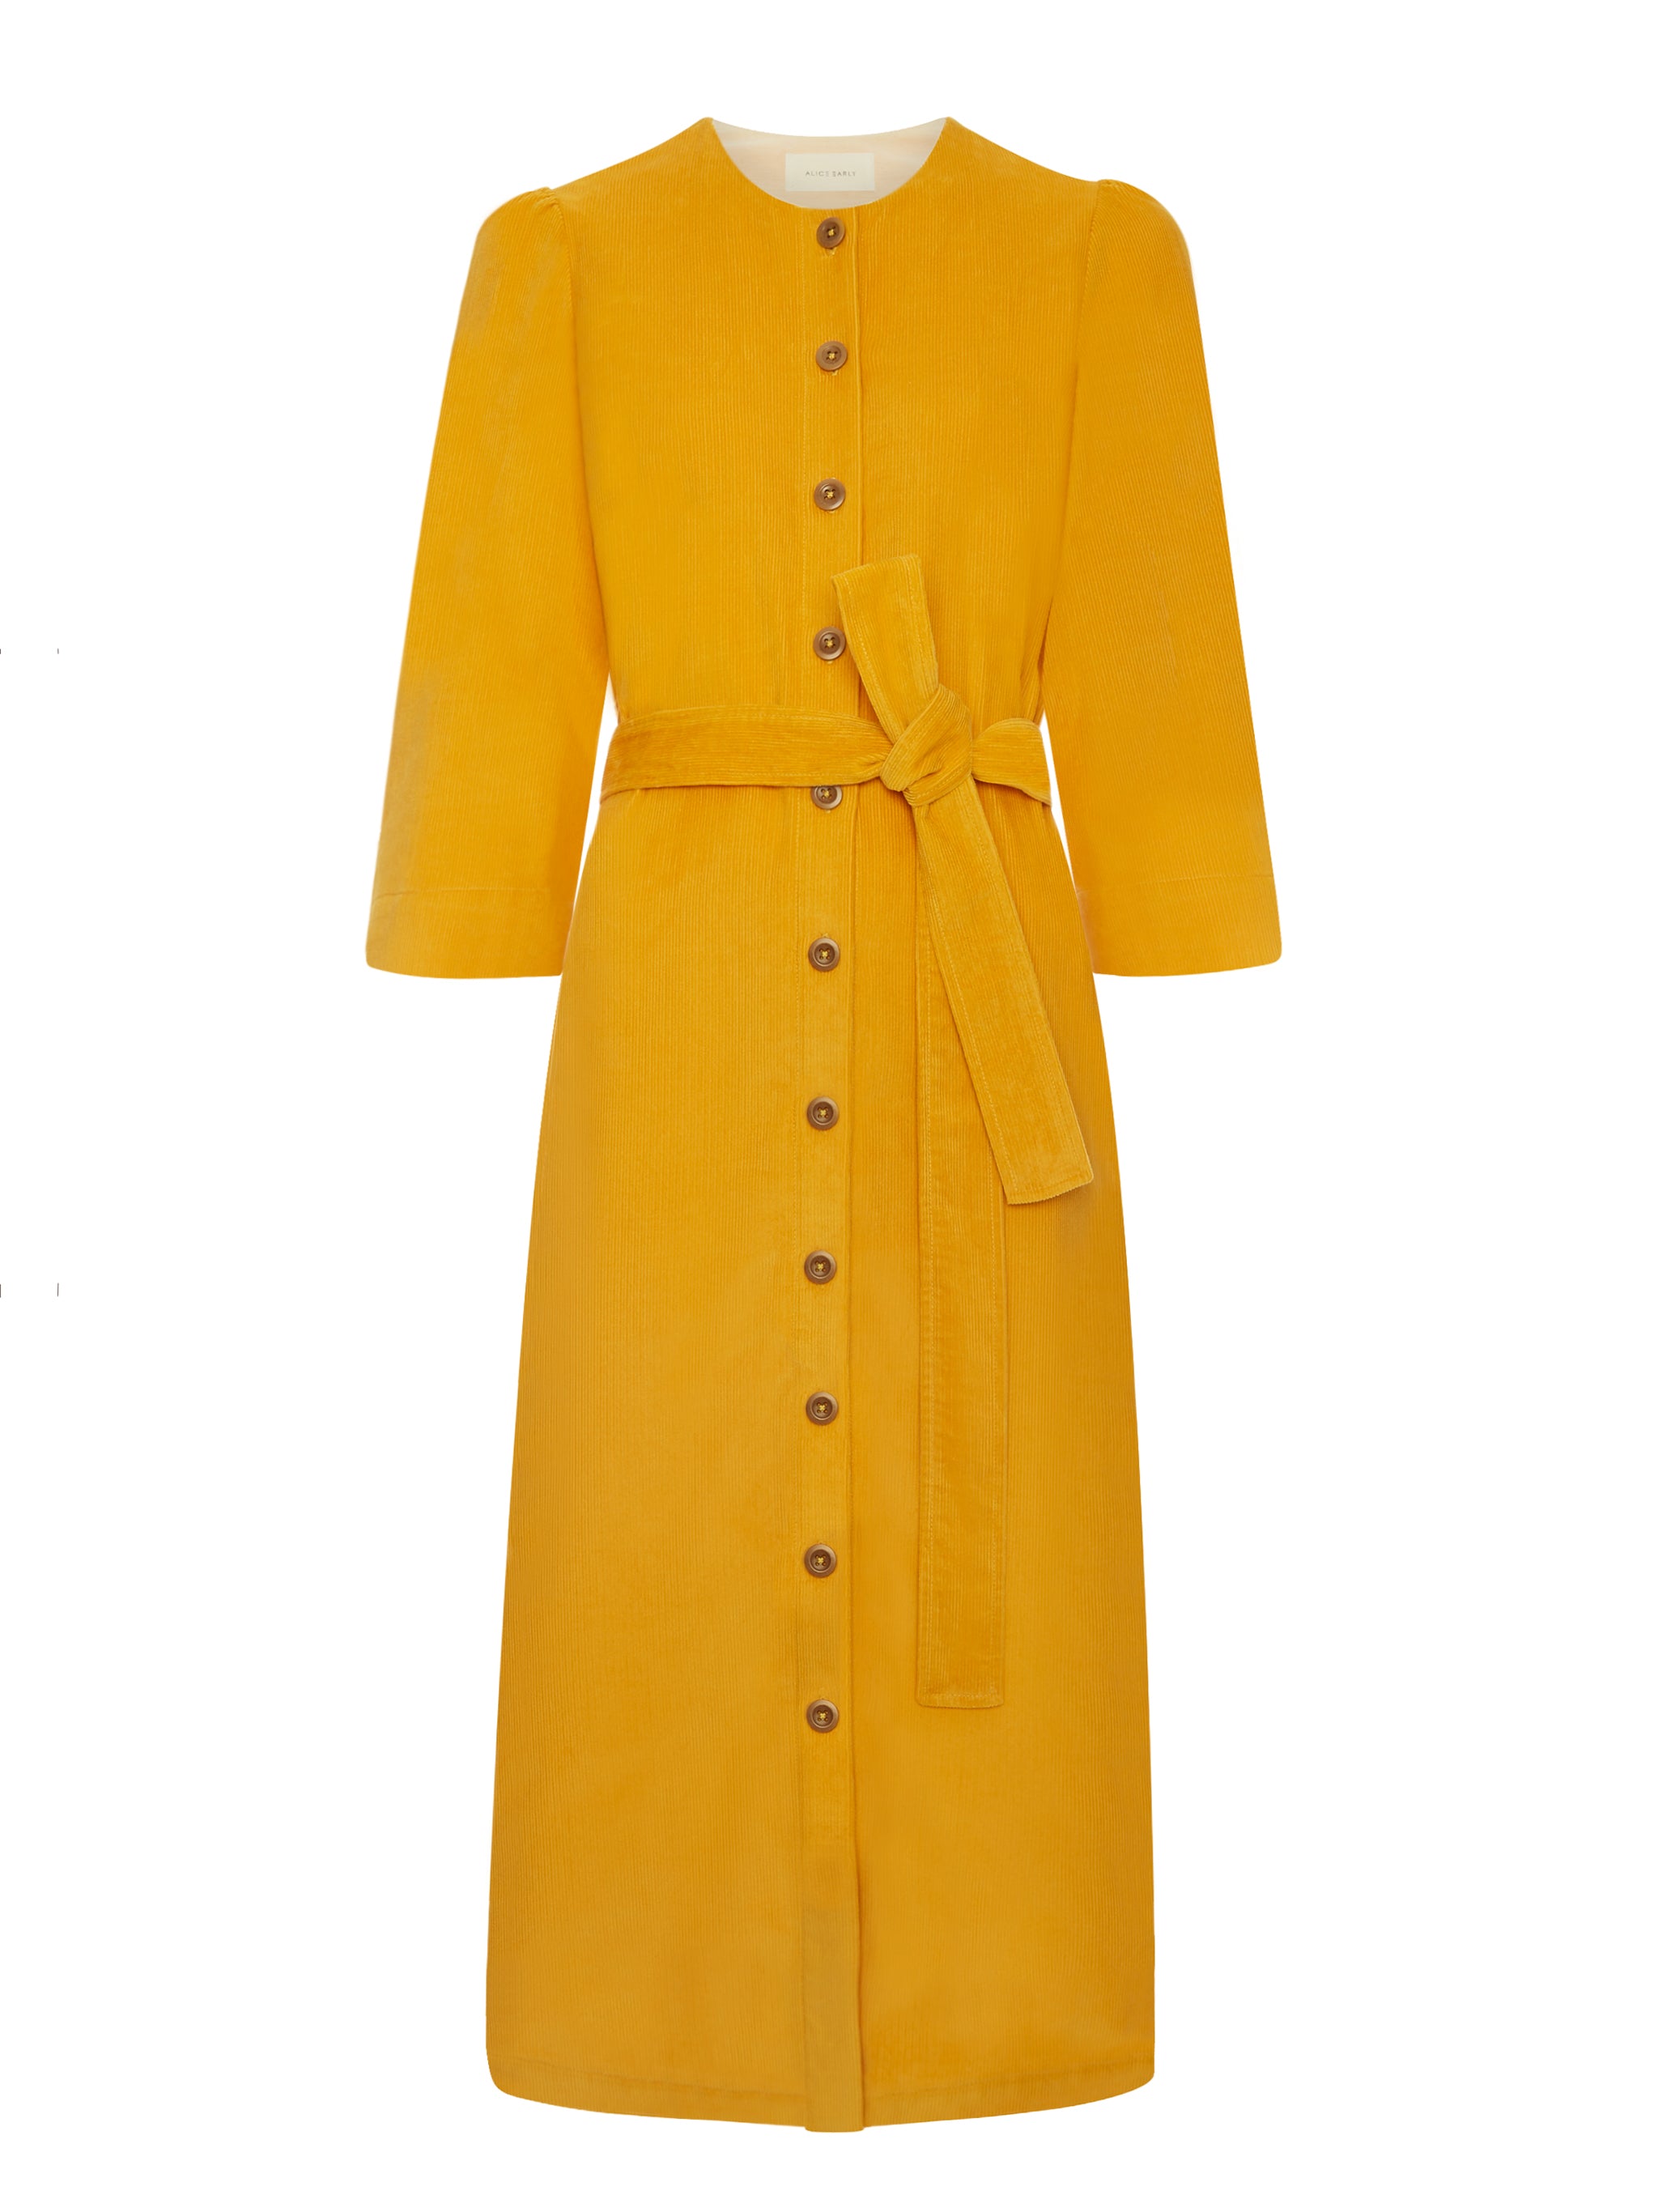 Rhianon Dress - Mustard Yellow - Alice Early